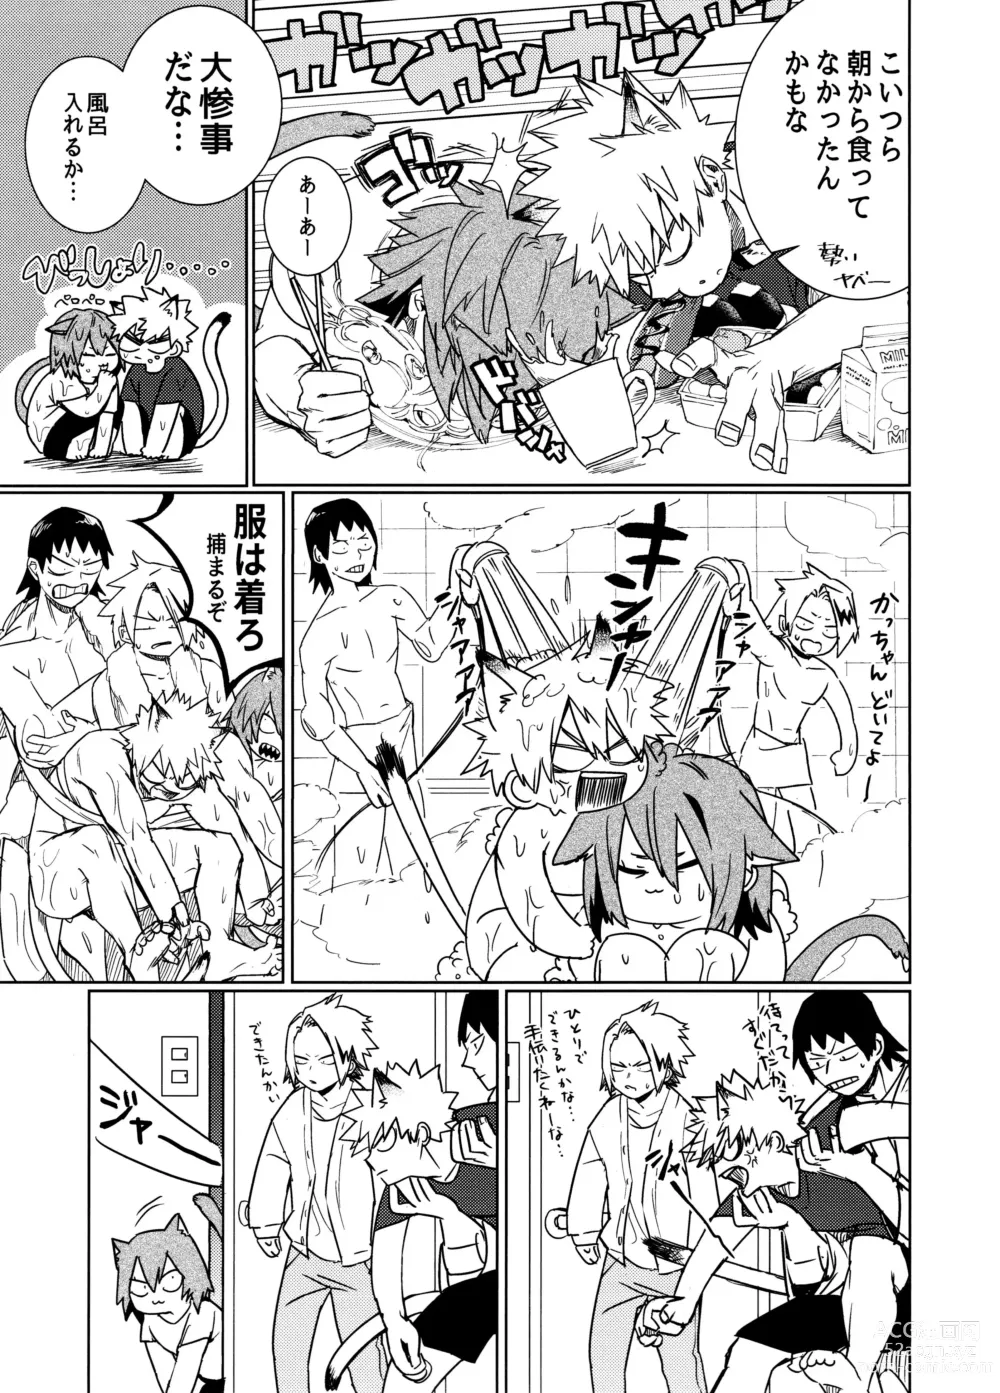 Page 7 of doujinshi Nekojiko Trigger